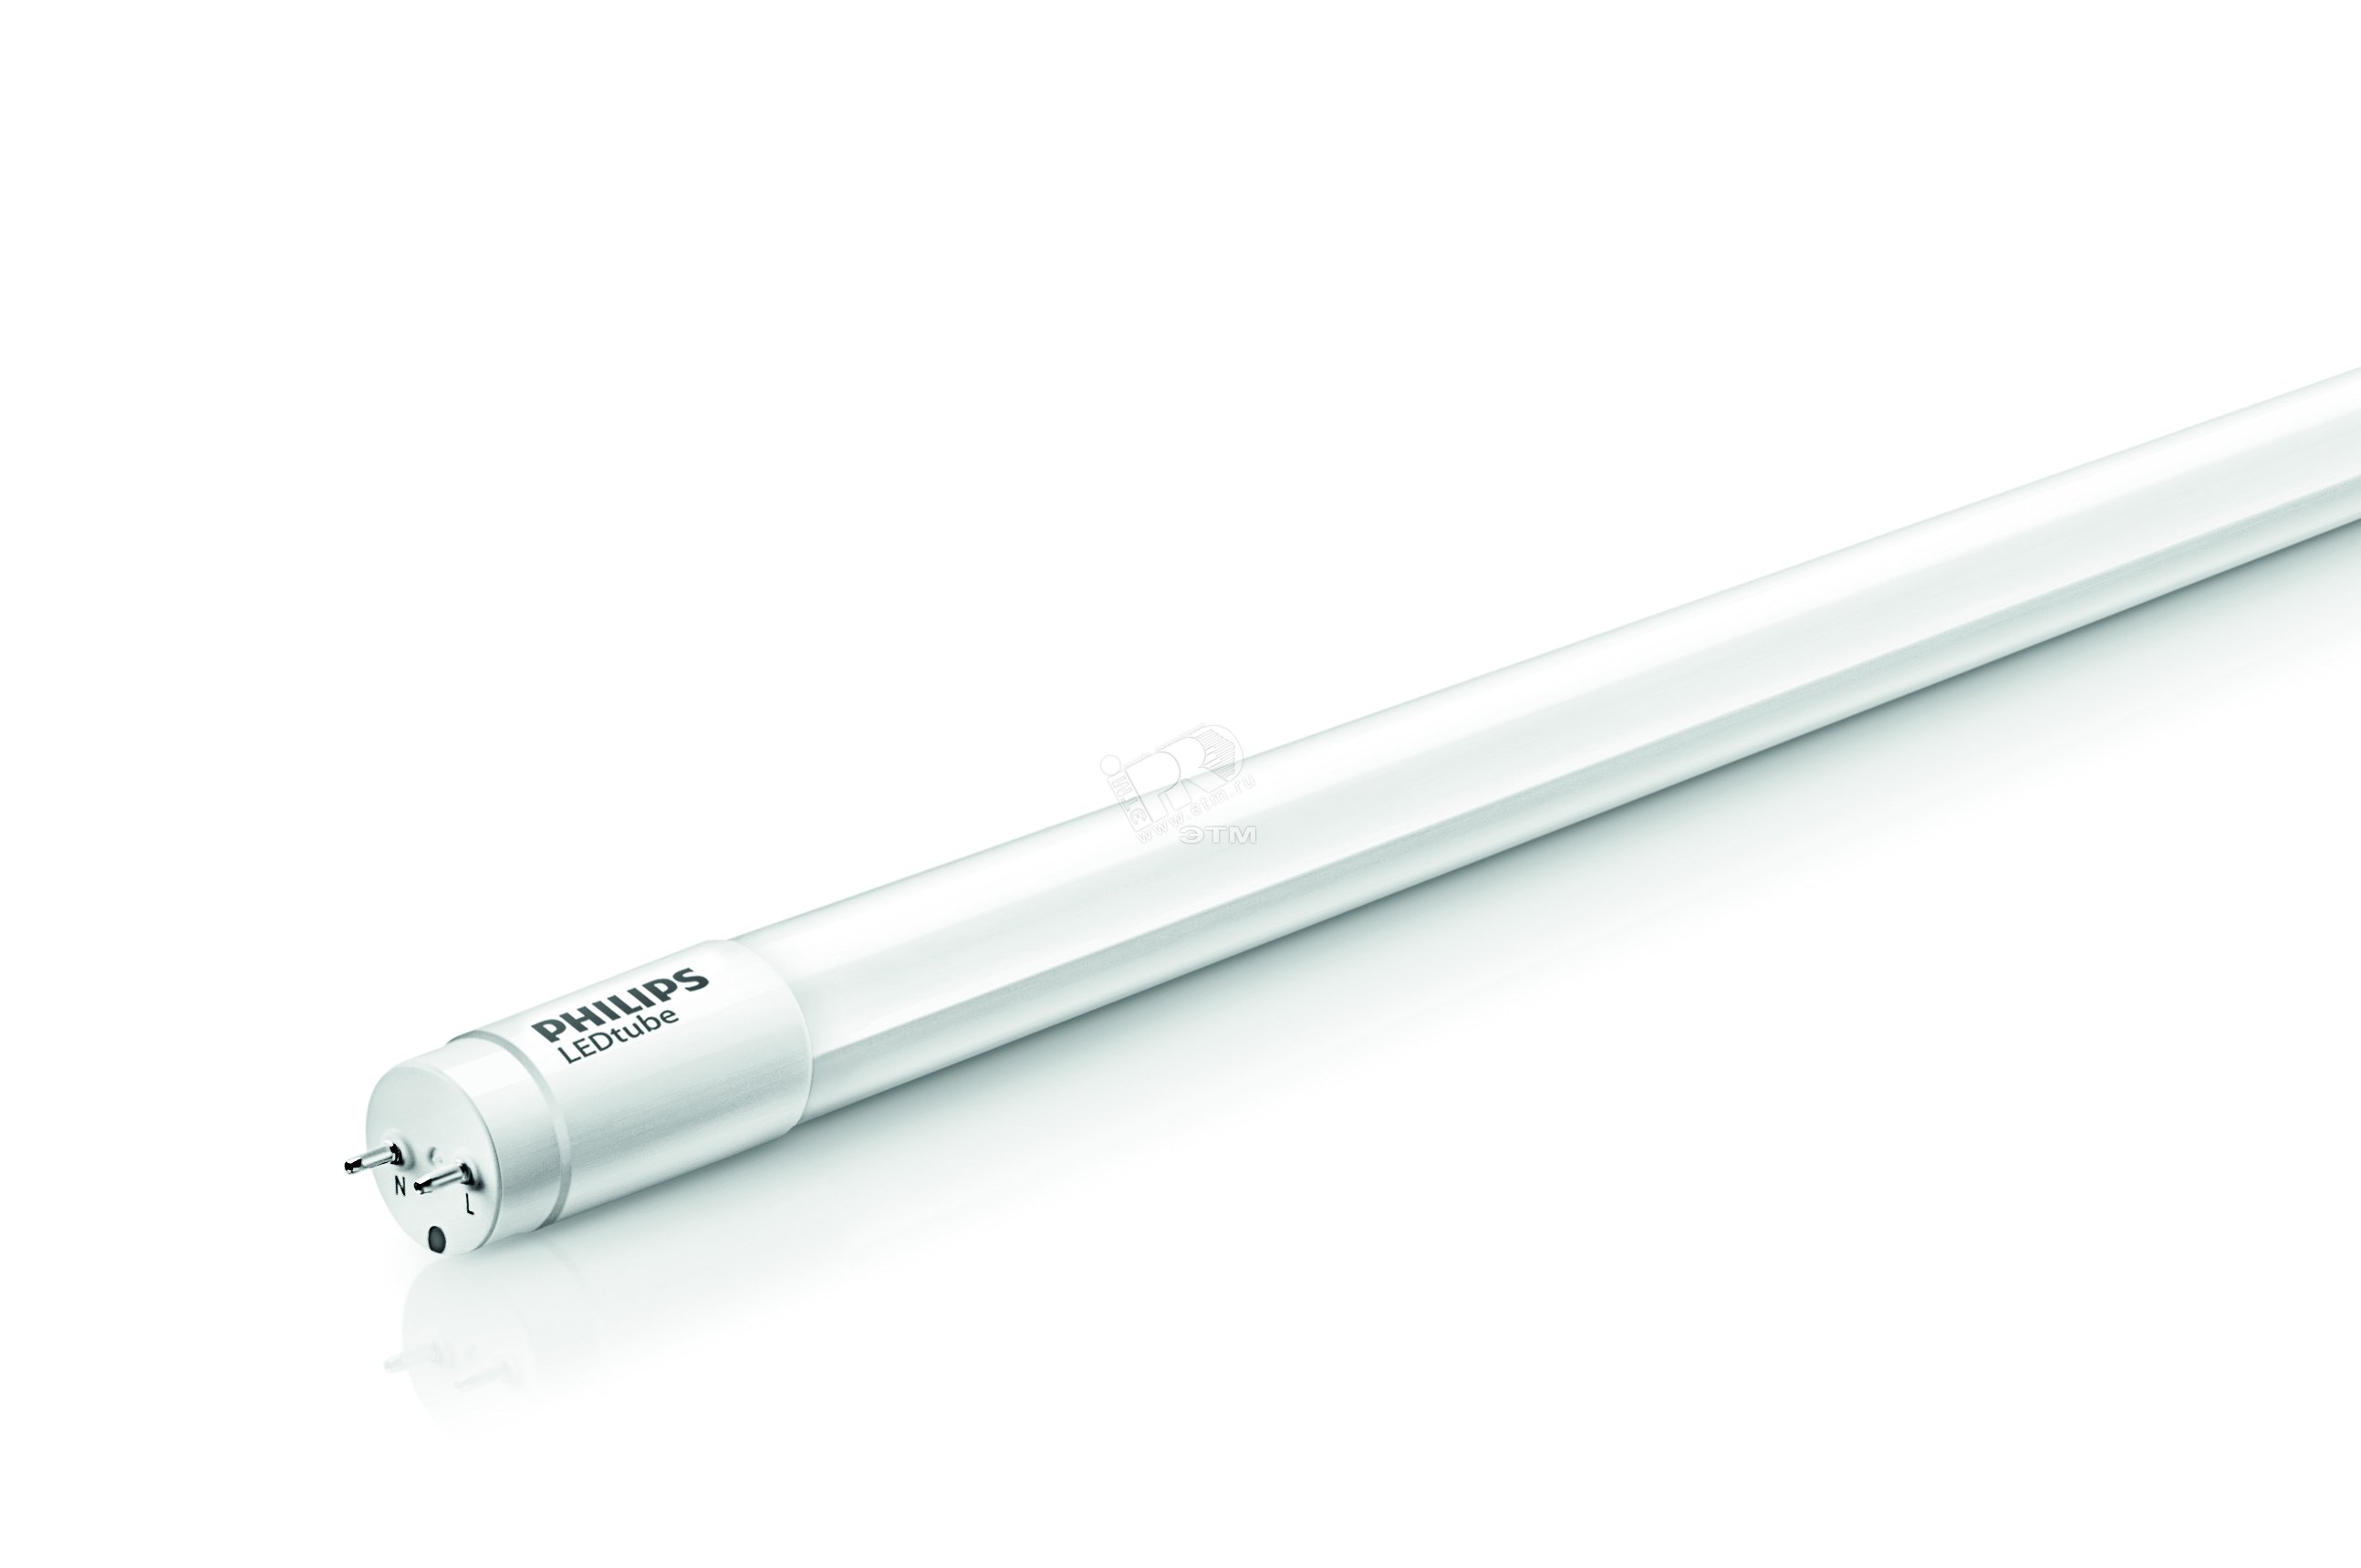 Лампа светодиодная LEDtube Essential 600мм 8 Вт G13 840 белый гофра 929001173208 PHILIPS Lightning - превью 2